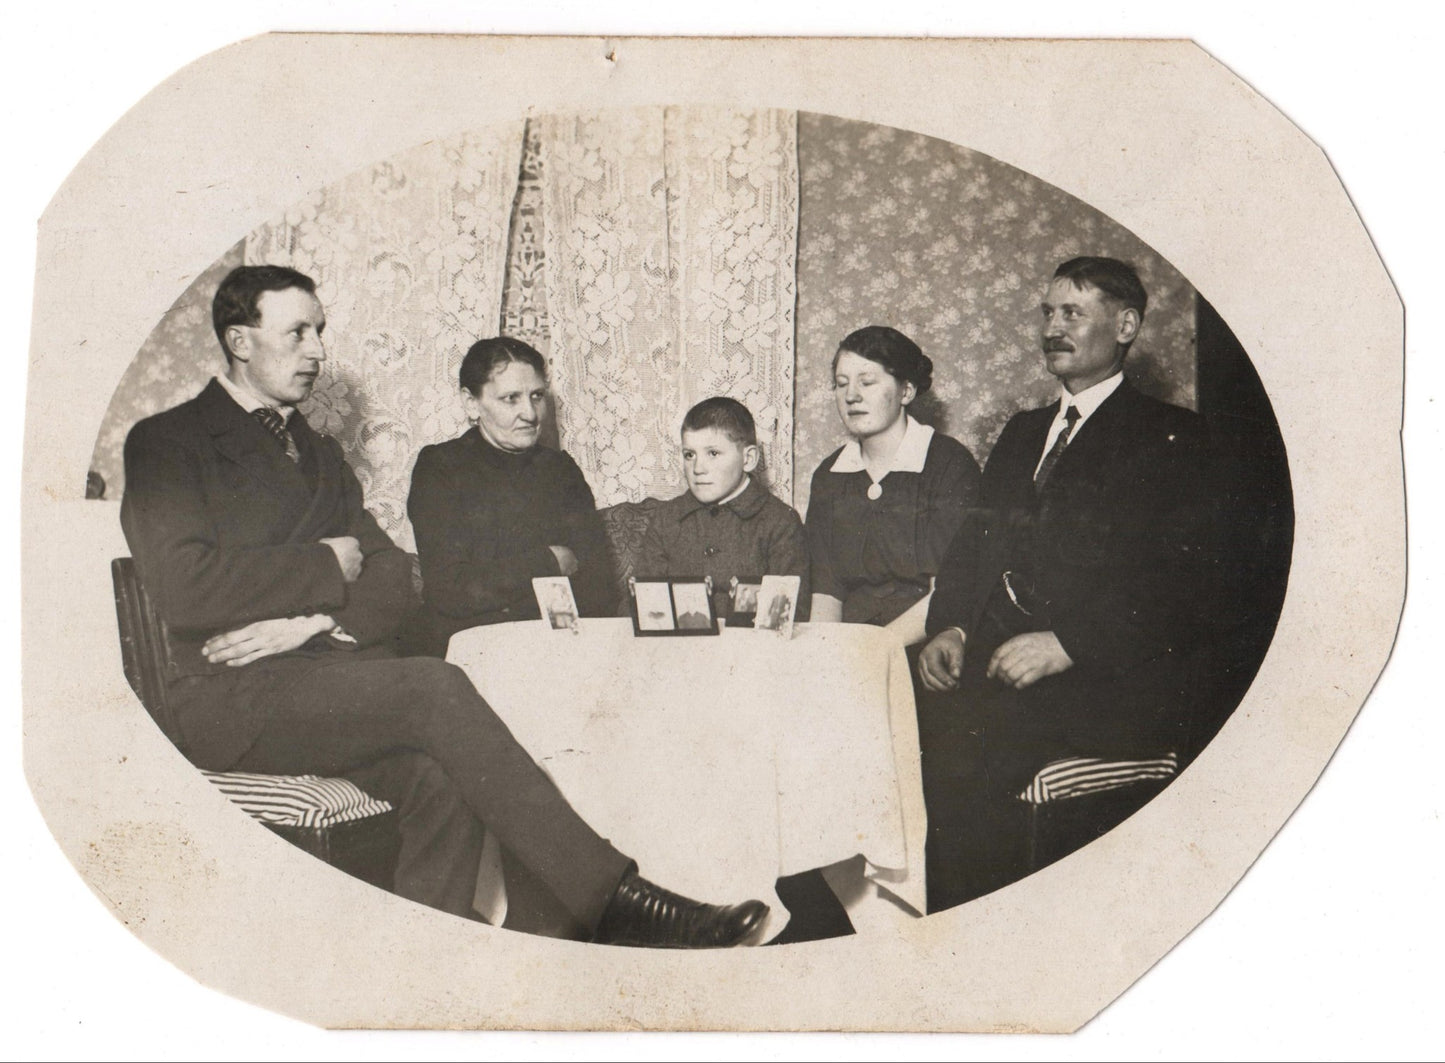 Vintage Postcard - Family Evening - Family Group Portrait - Europe 20th Century